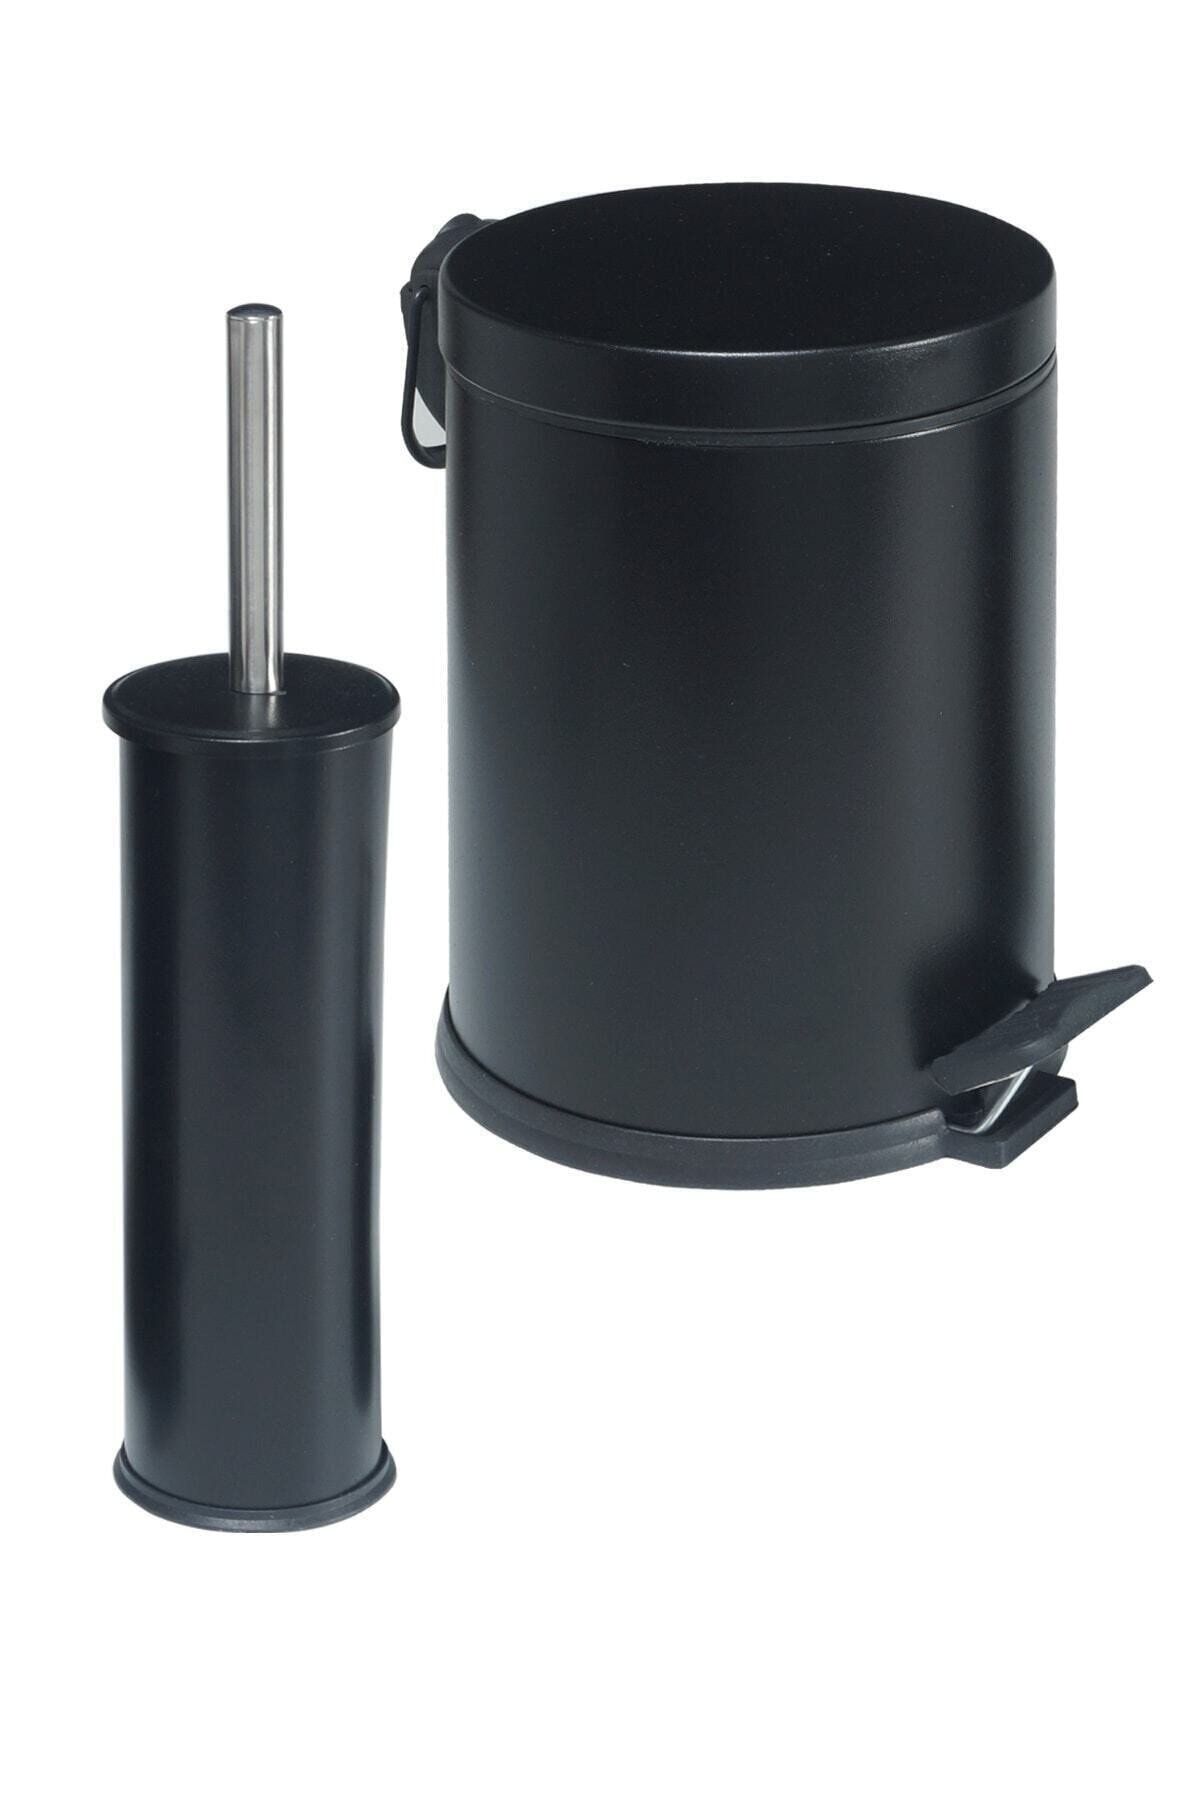 GörSeç Siyah 3 Litre 2'li Banyo Seti Pedallı Çöp Kovası Wc Klozet Tuvalet Fırça Seti Banyo Çöp Kovası